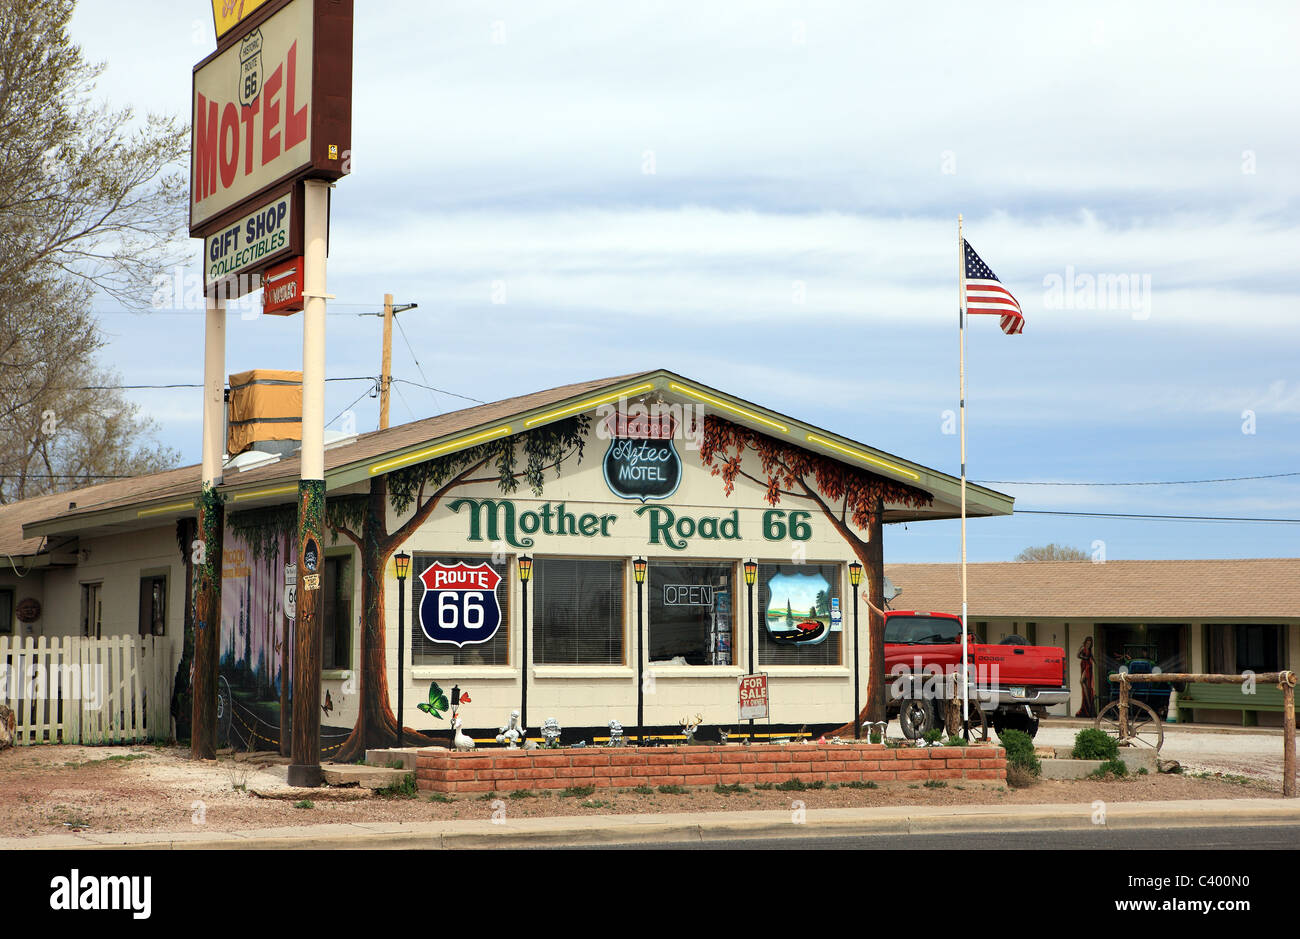 Route 66 shops at Seligman, Arizona Stock Photo - Alamy